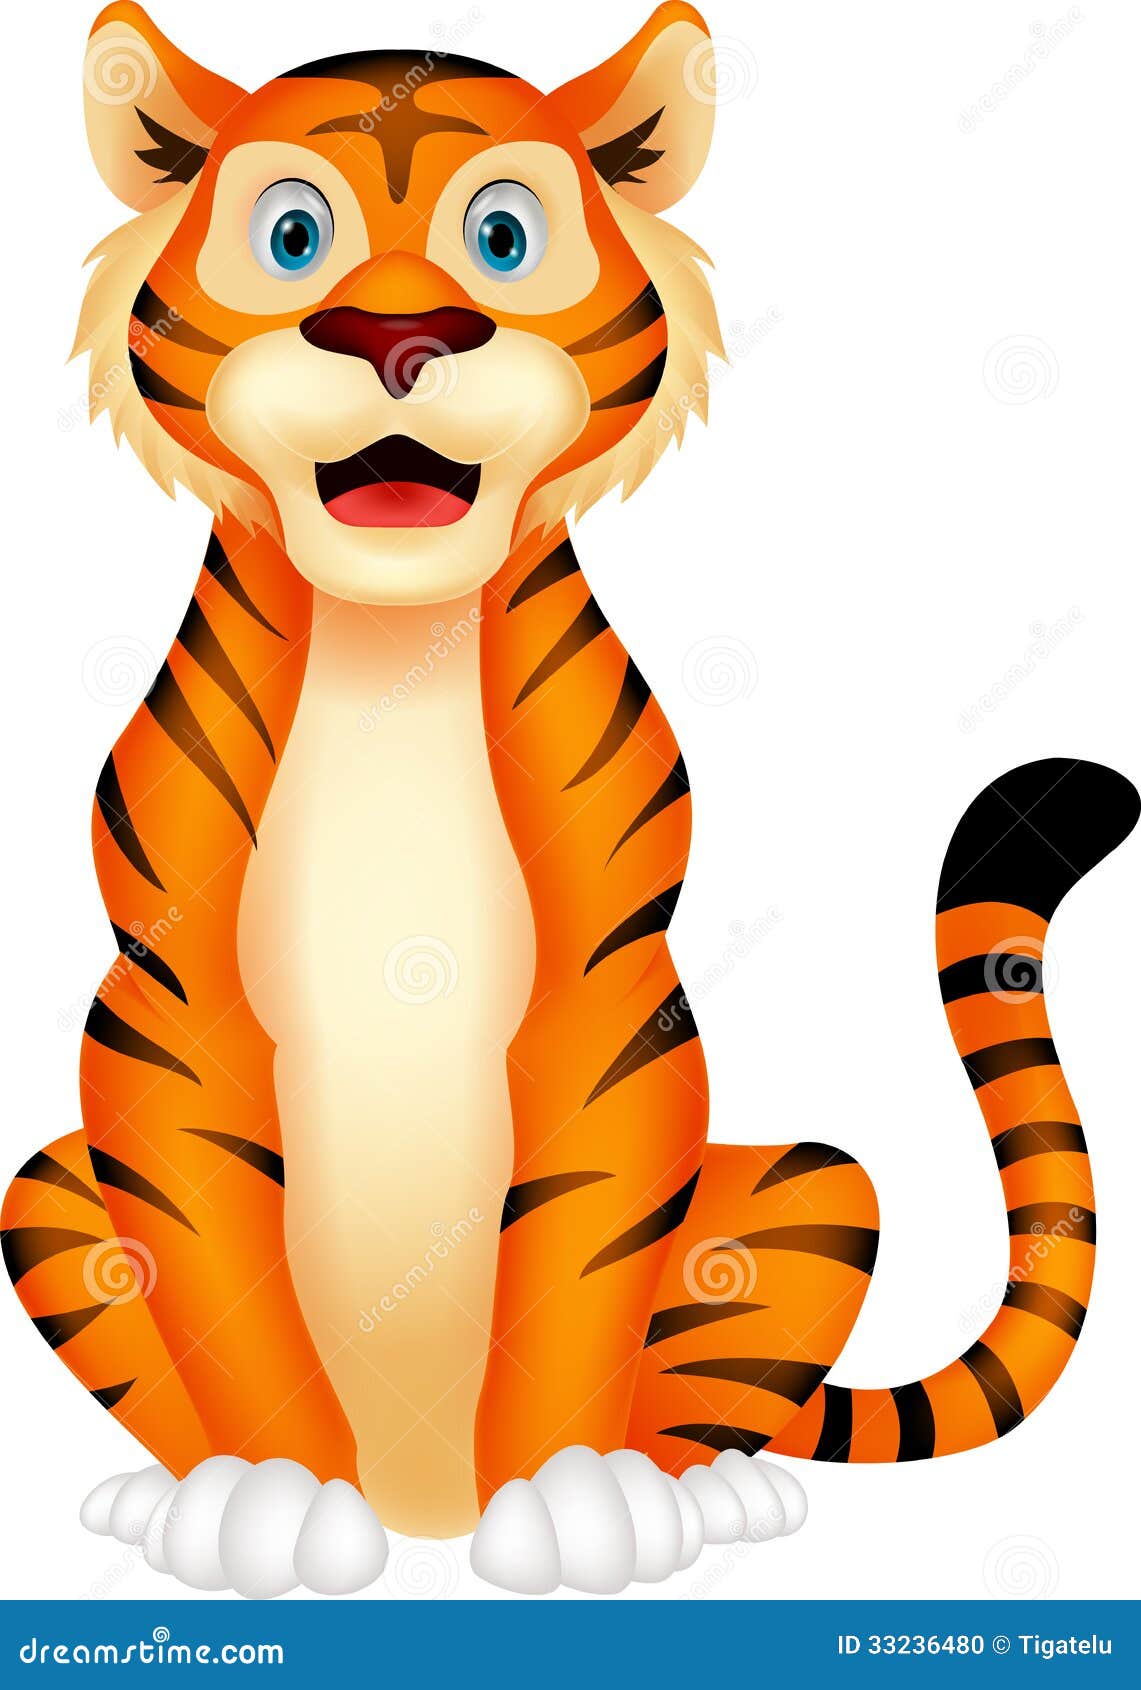 Cute tiger cartoon sitting stock vector. Illustration of sports ...